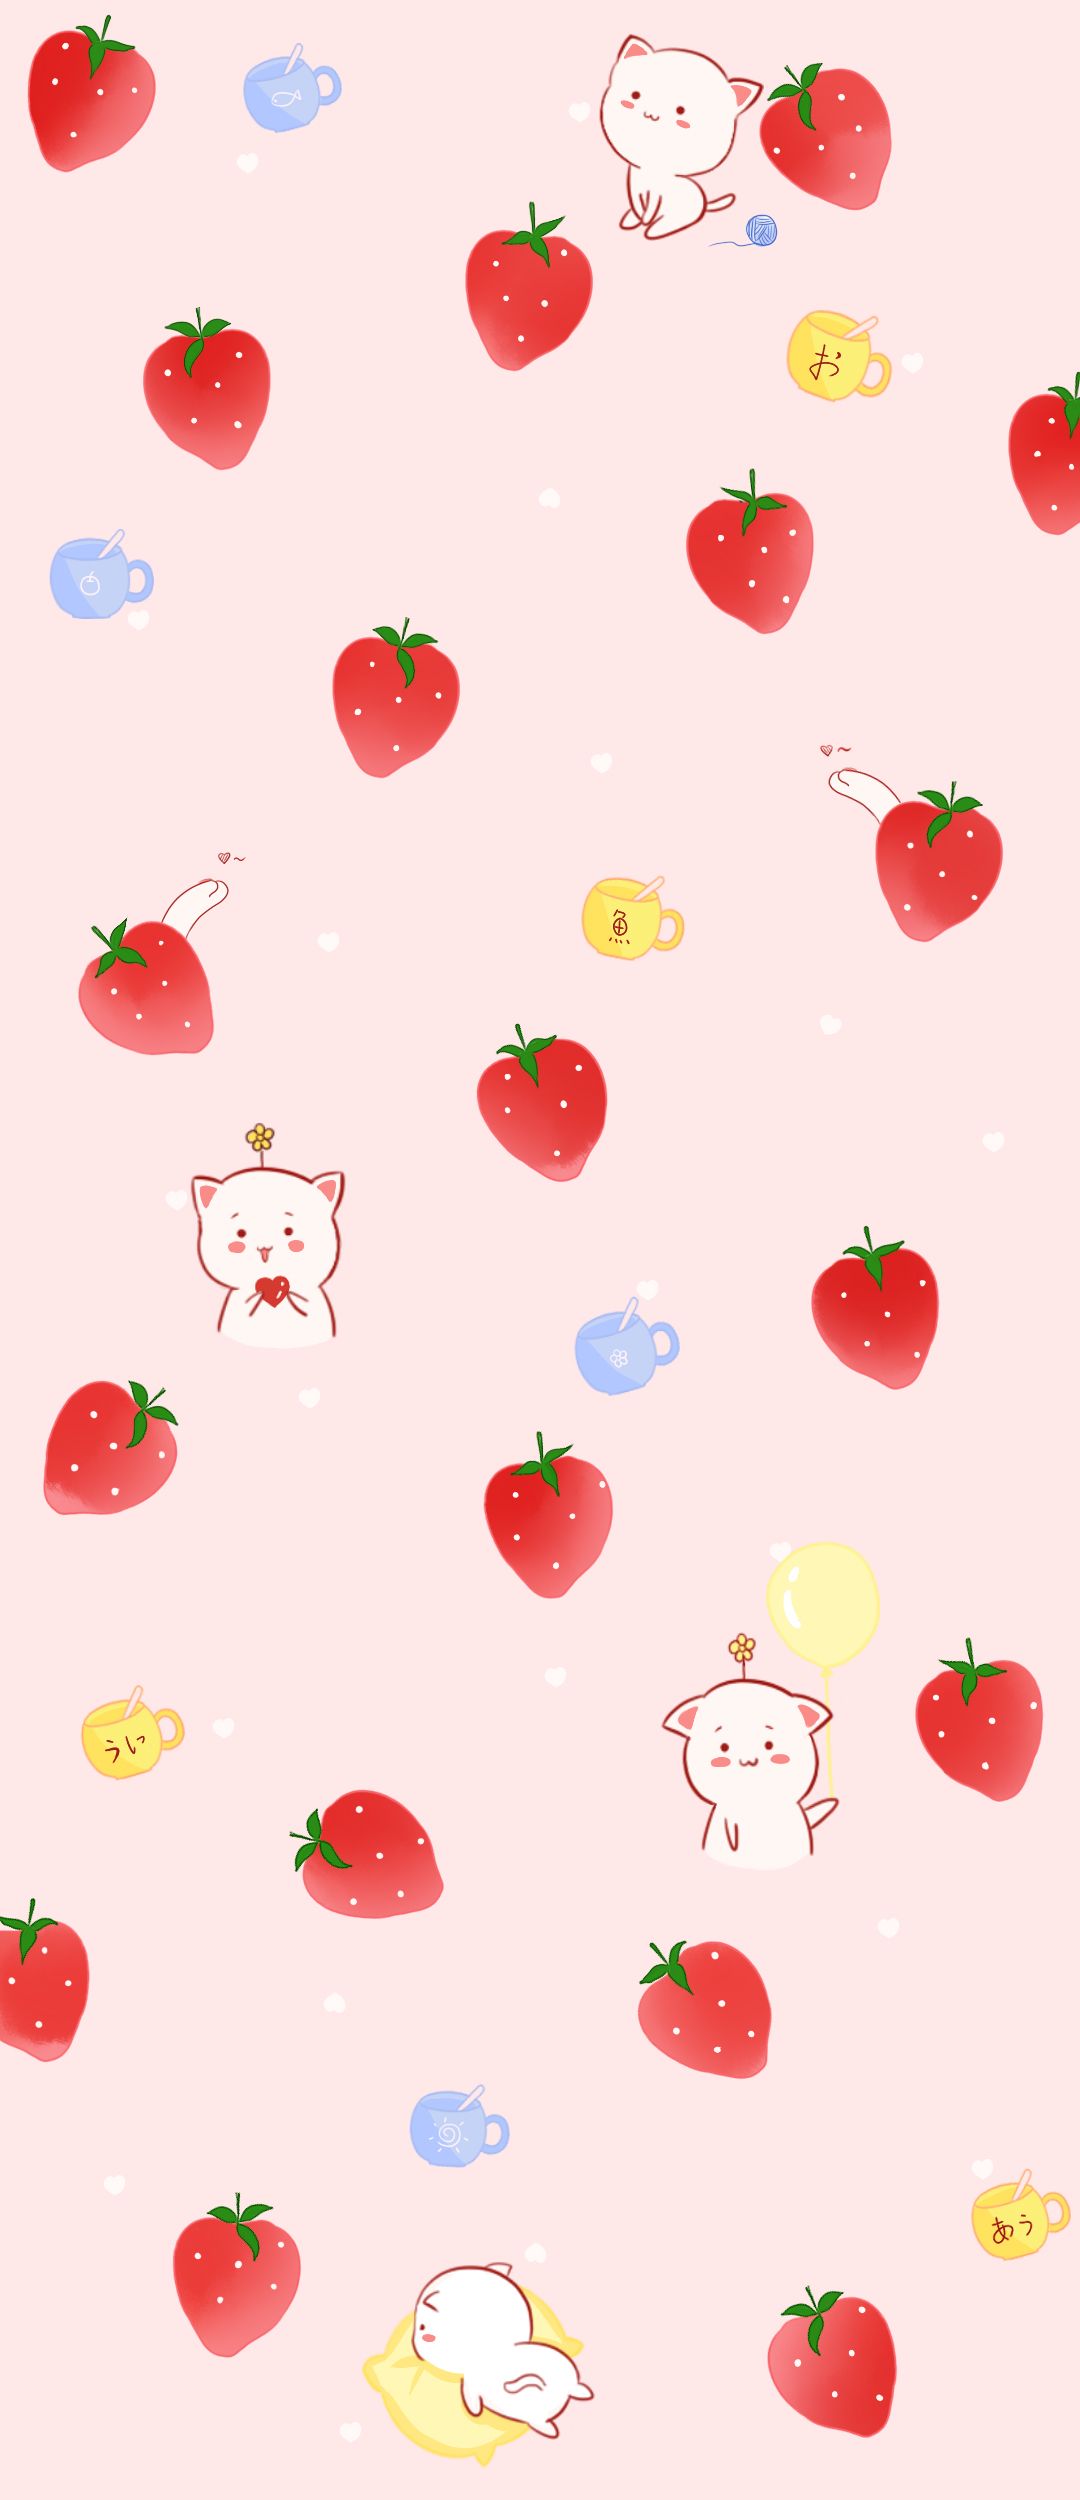 strawberry wallpaper. iPhone wallpaper tumblr aesthetic, Cute patterns wallpaper, Wallpaper iphone cute